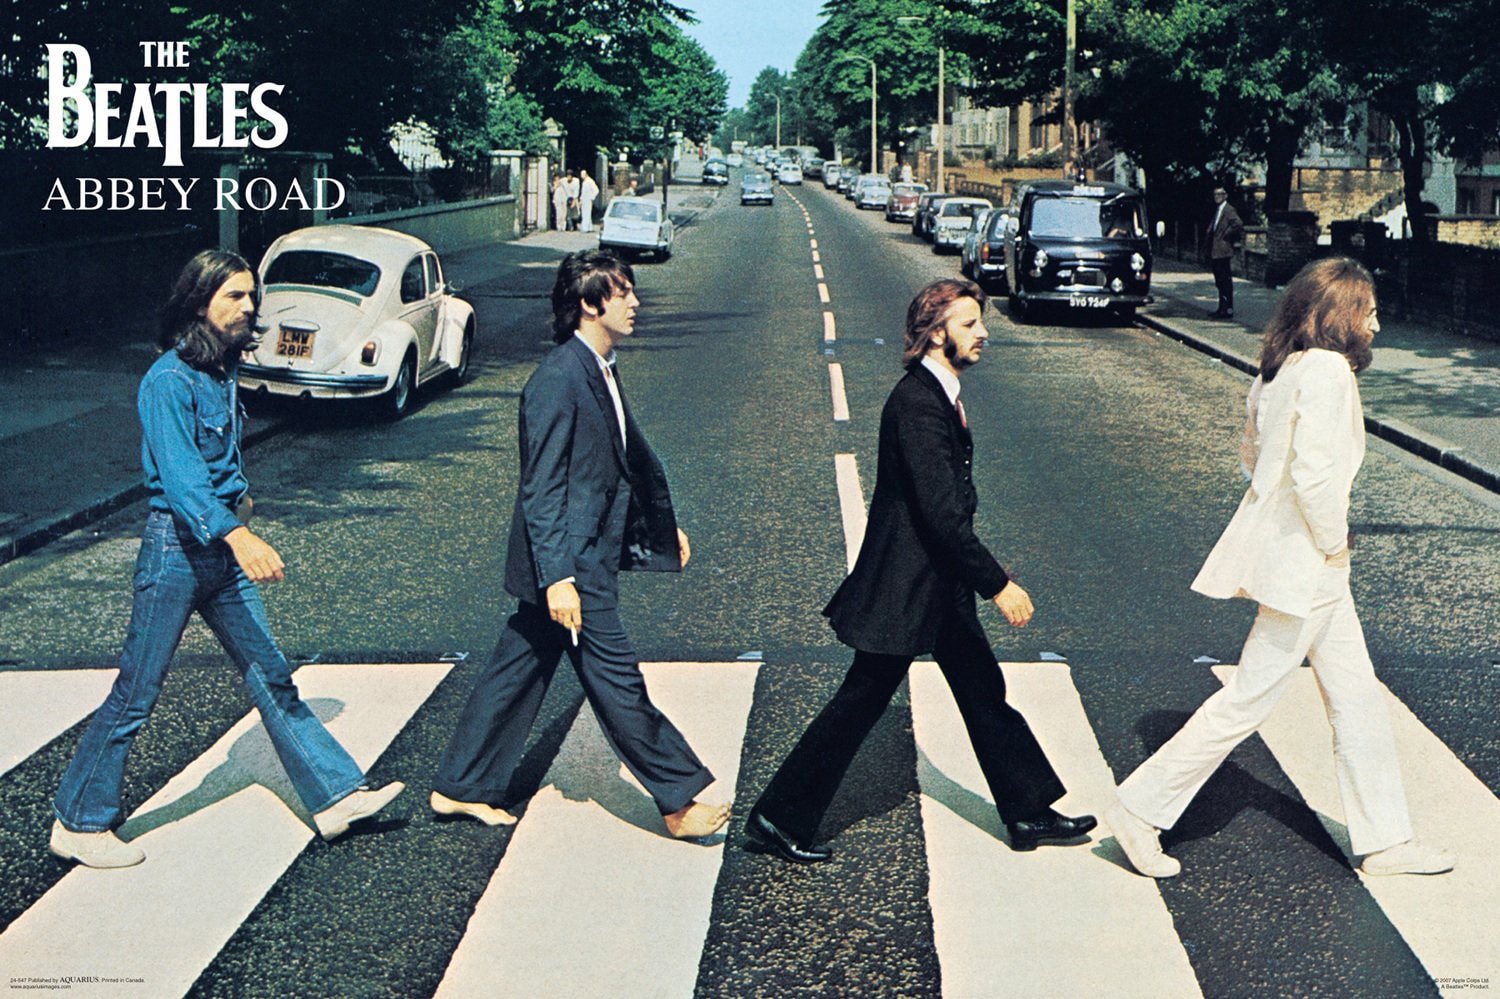 The Beatles 成員 Paul McCartney 再度走上 Abbey Road